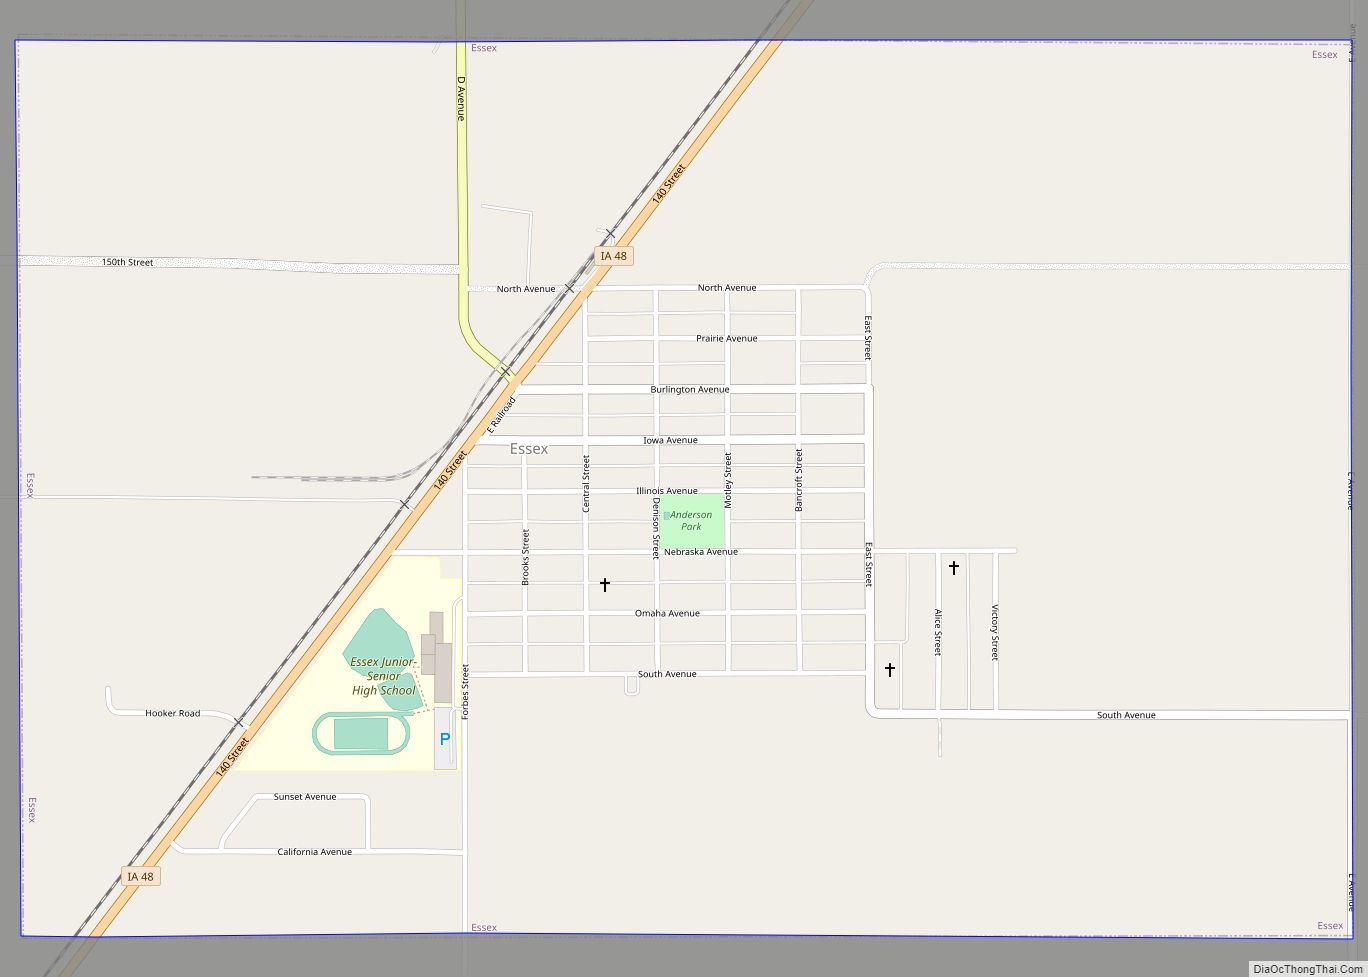 Map of Essex city, Iowa